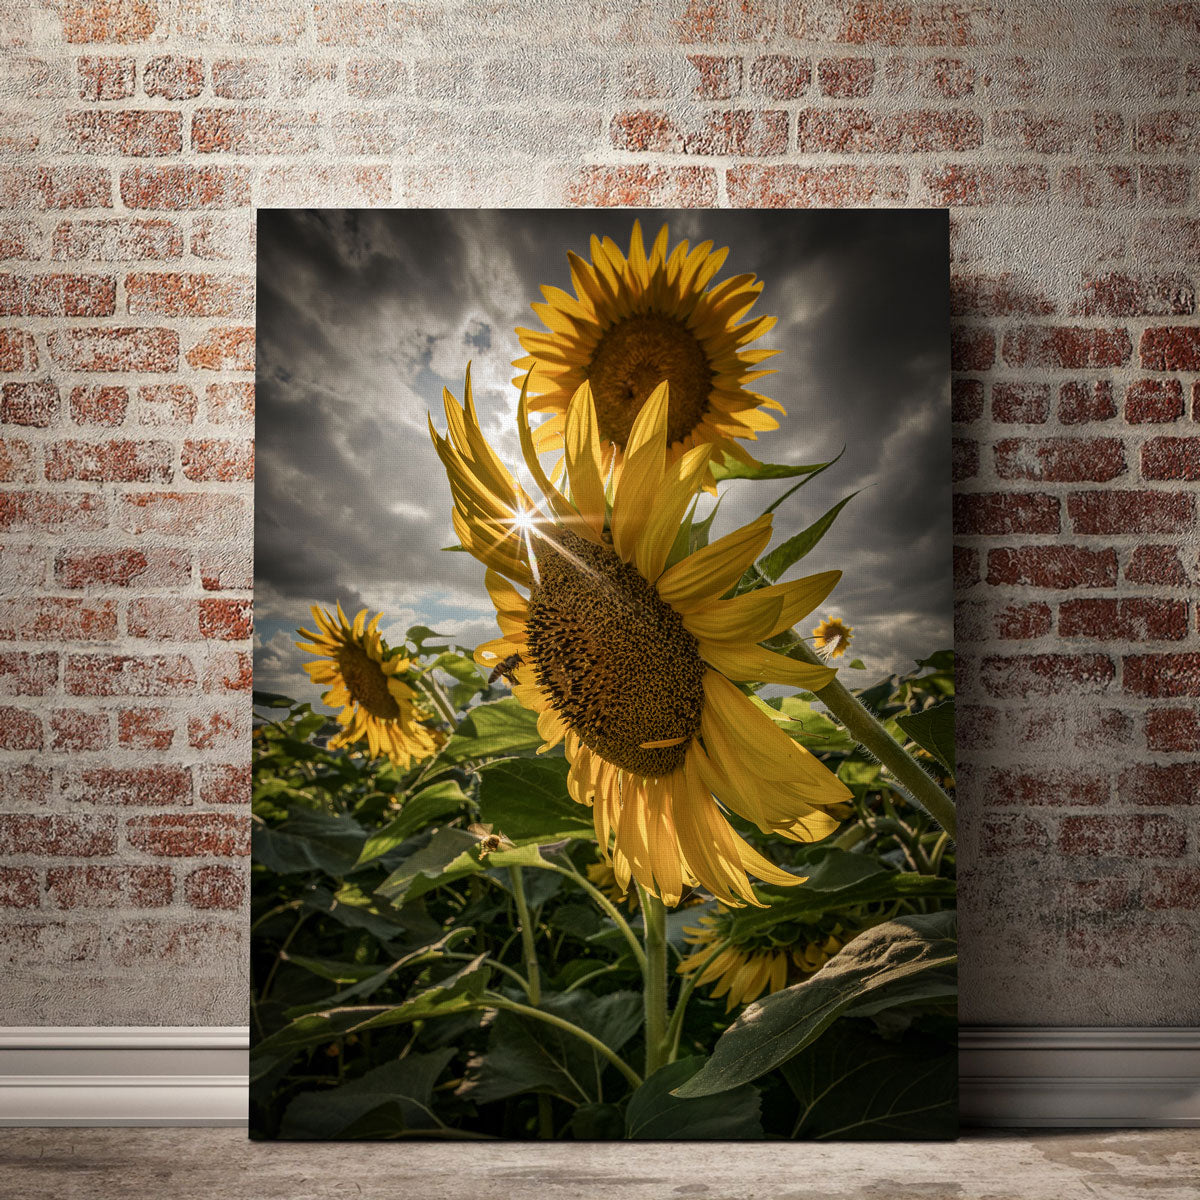 Cloudy Sunflowers